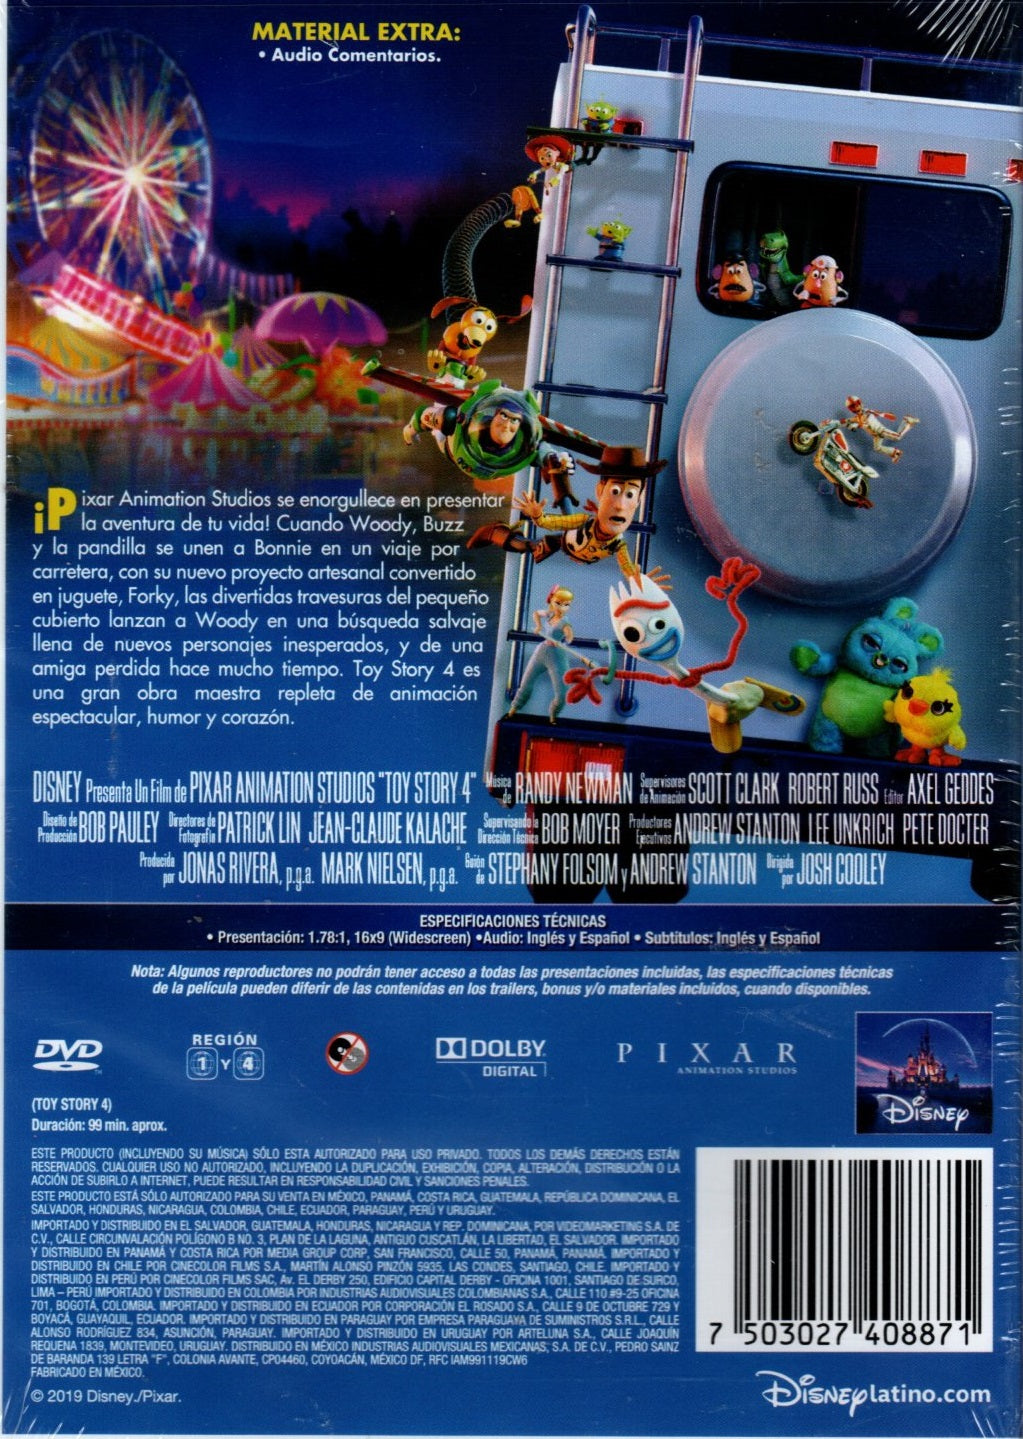 DVD Toy Story 4 - Pixar